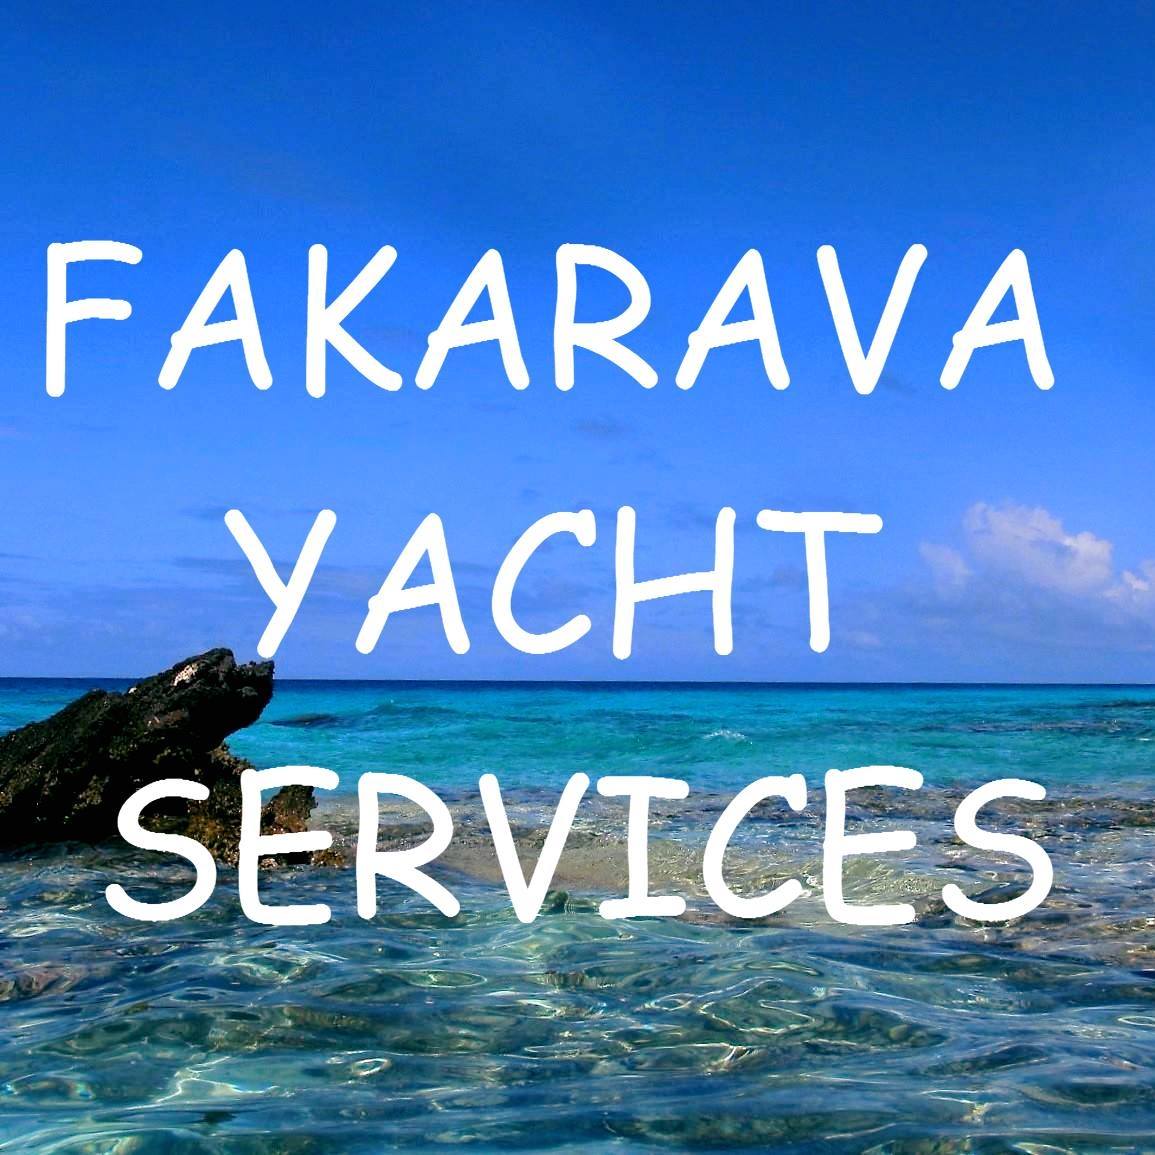 fakarava Yacht Services.jpg